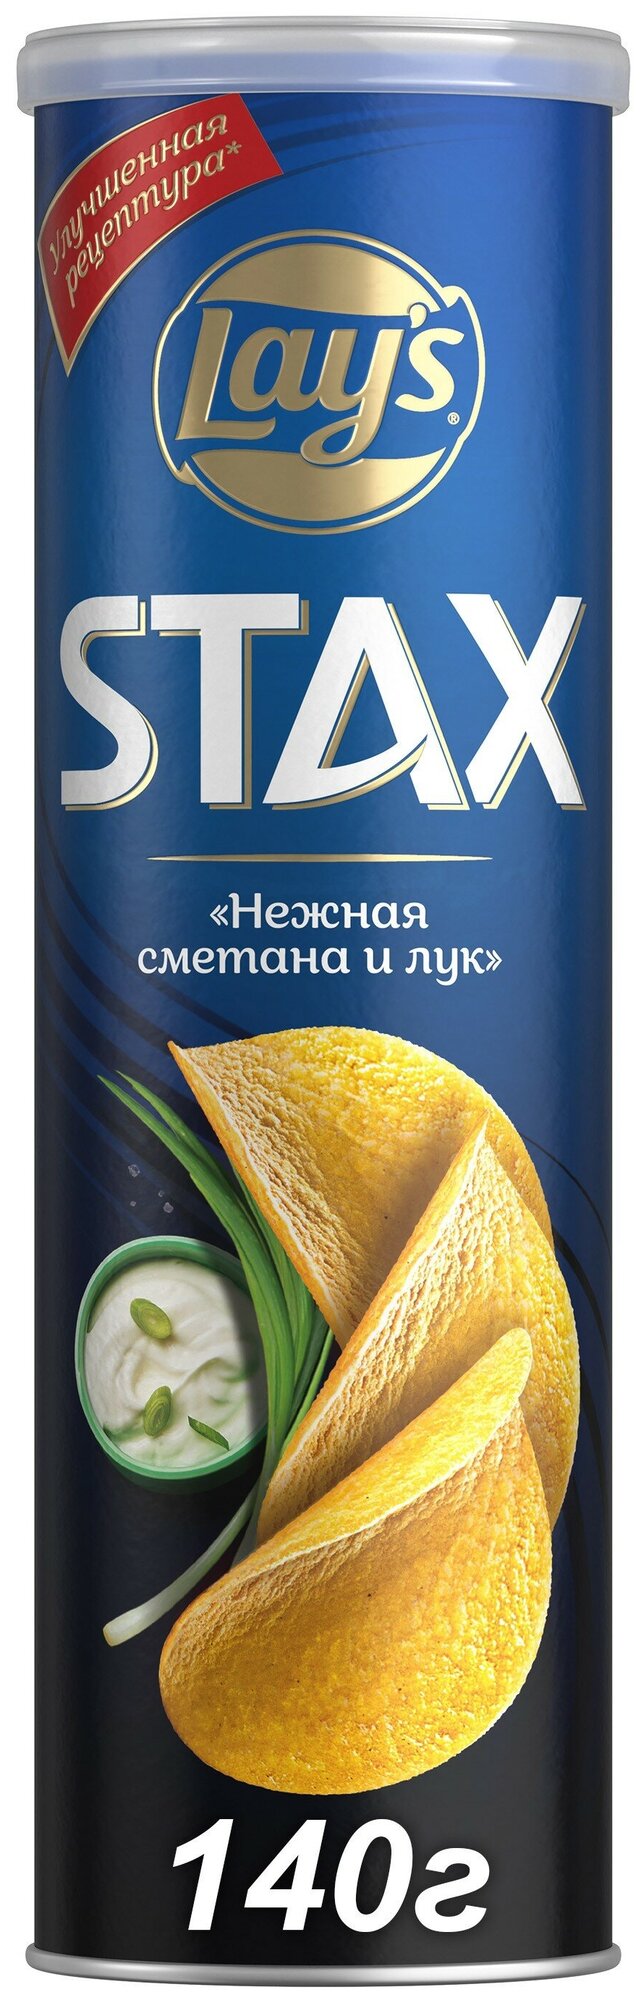 Чипсы Lay's Stax картофельные, лук-сметана, 140 г